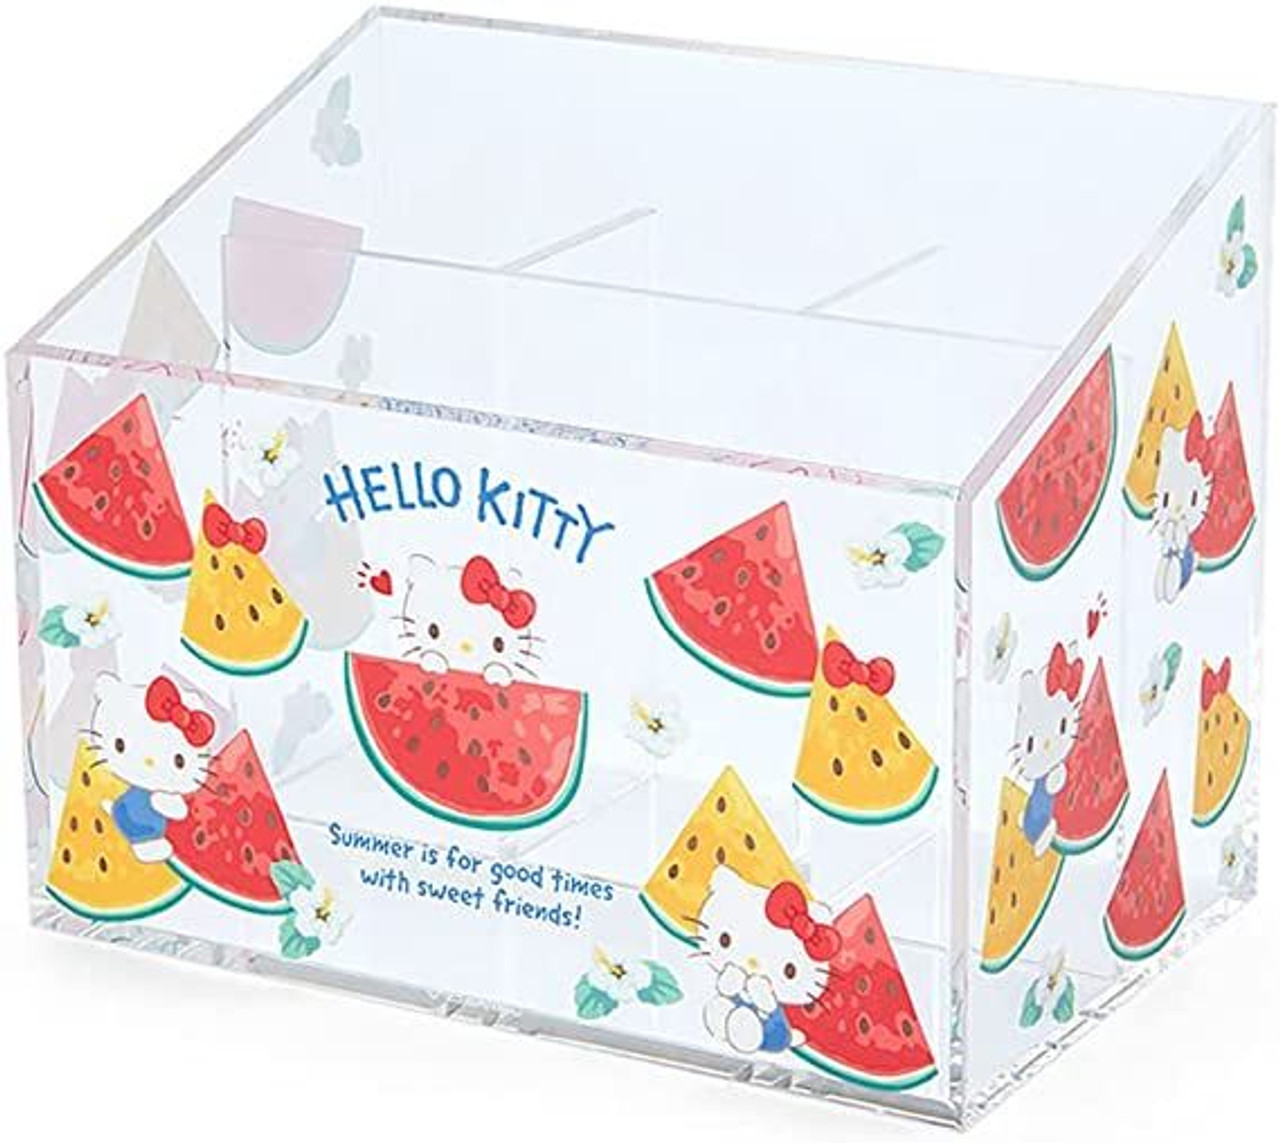 Hello Kitty Watermelon Pen Stand / Pen Holder Japan Sanrio Original